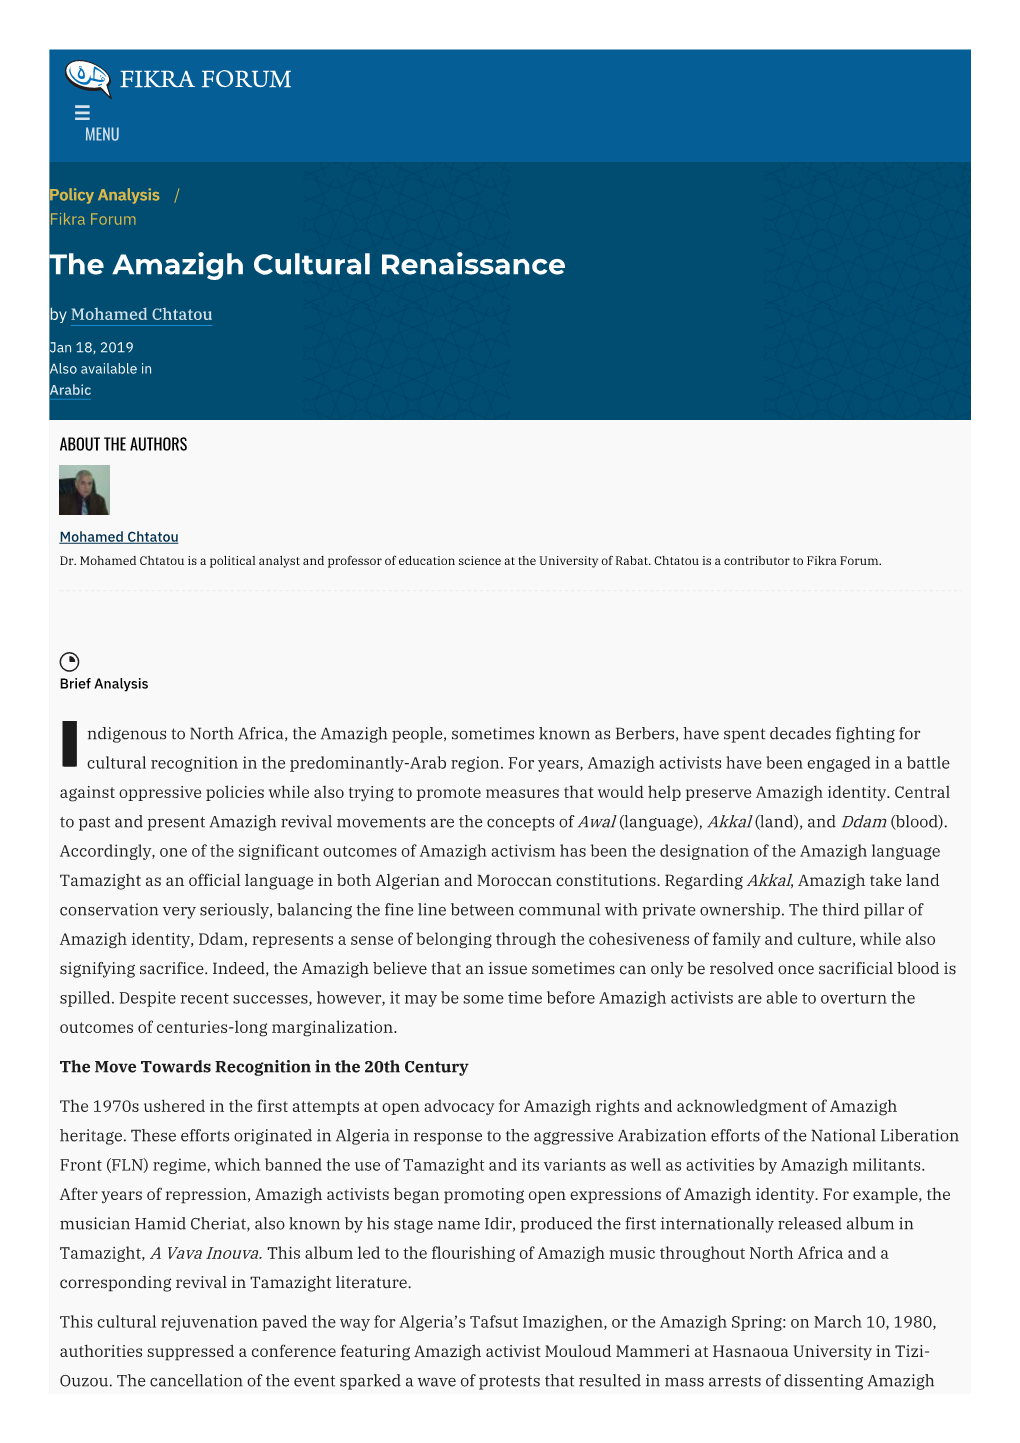 The Amazigh Cultural Renaissance | the Washington Institute